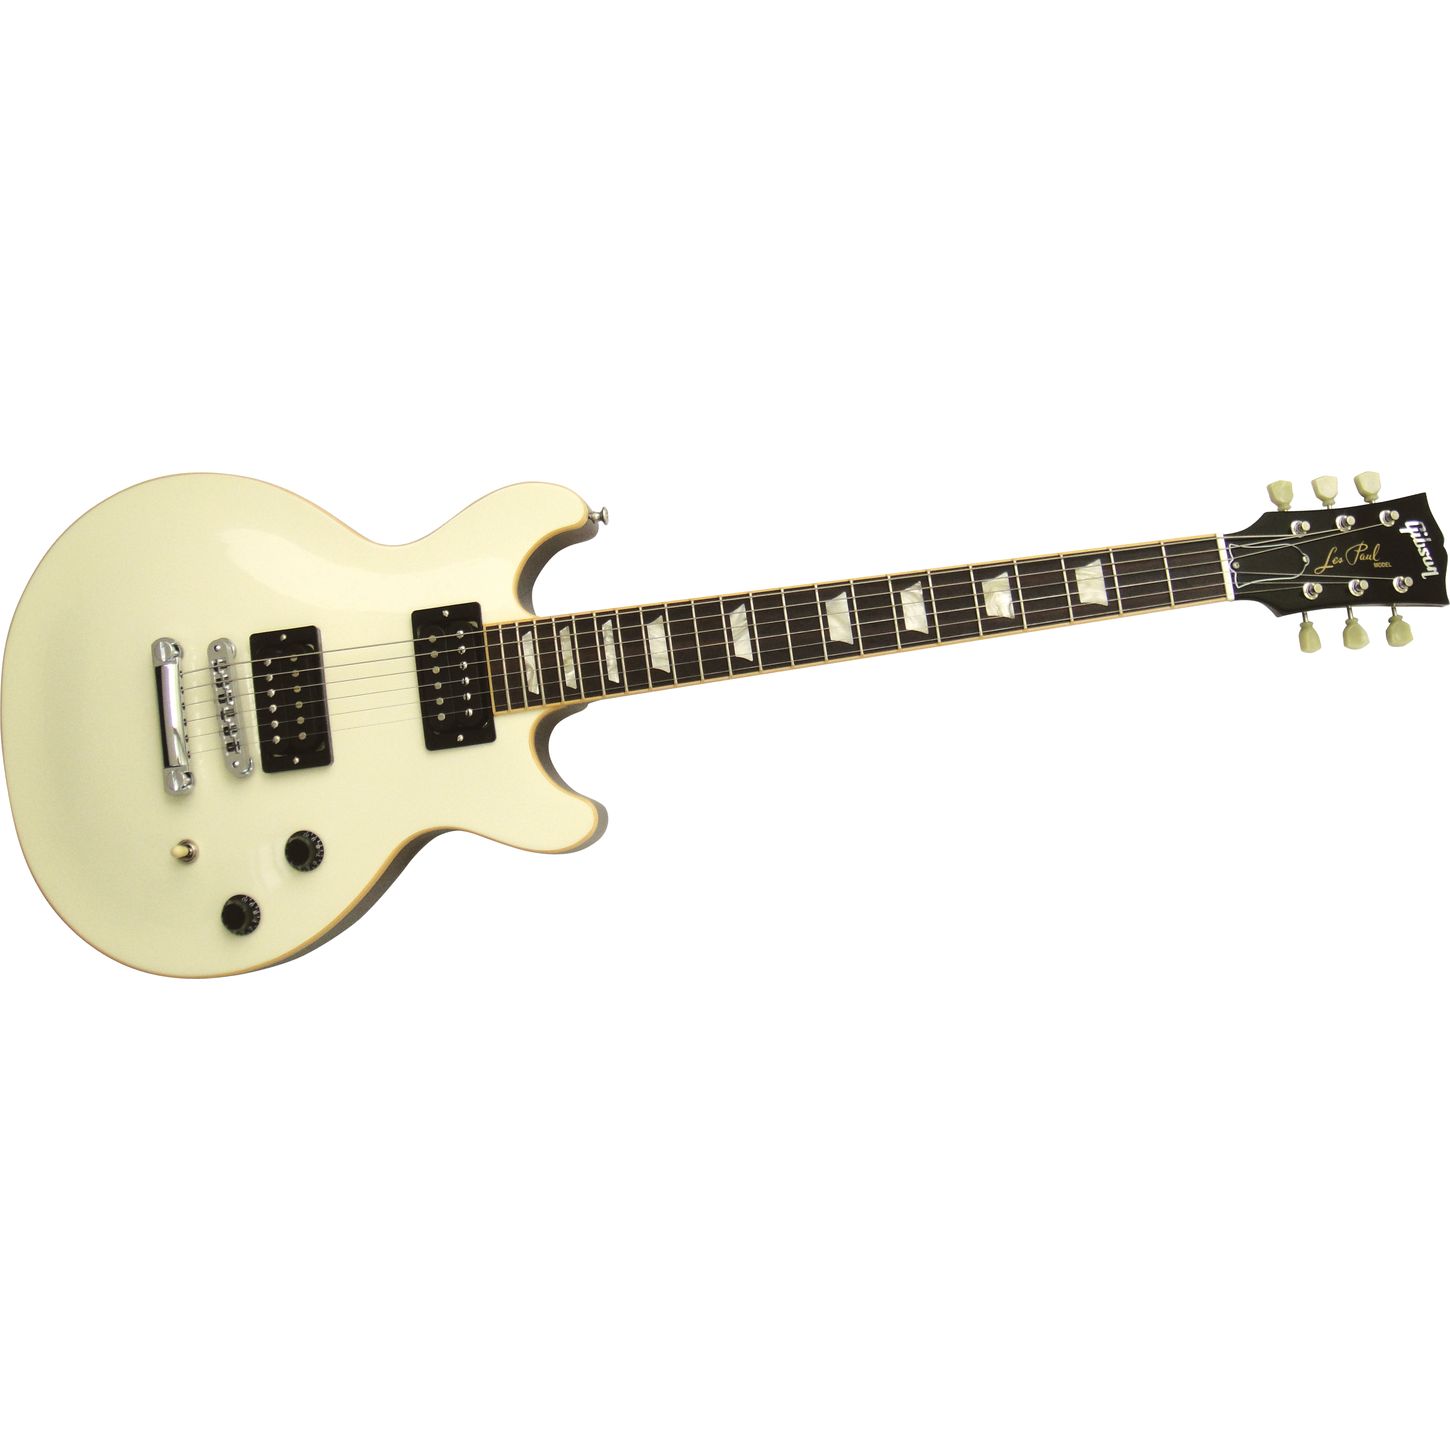 New Gibson Les Paul Double Cut Cutaway DC Electric Guitar White